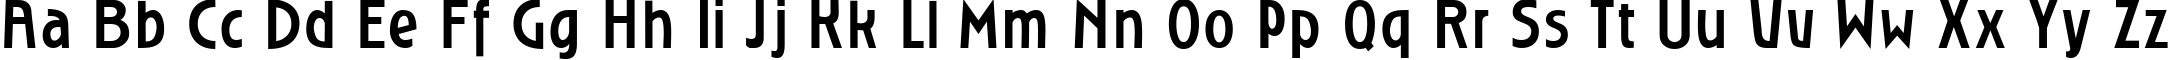 Пример написания английского алфавита шрифтом Roslyn Gothic Rus